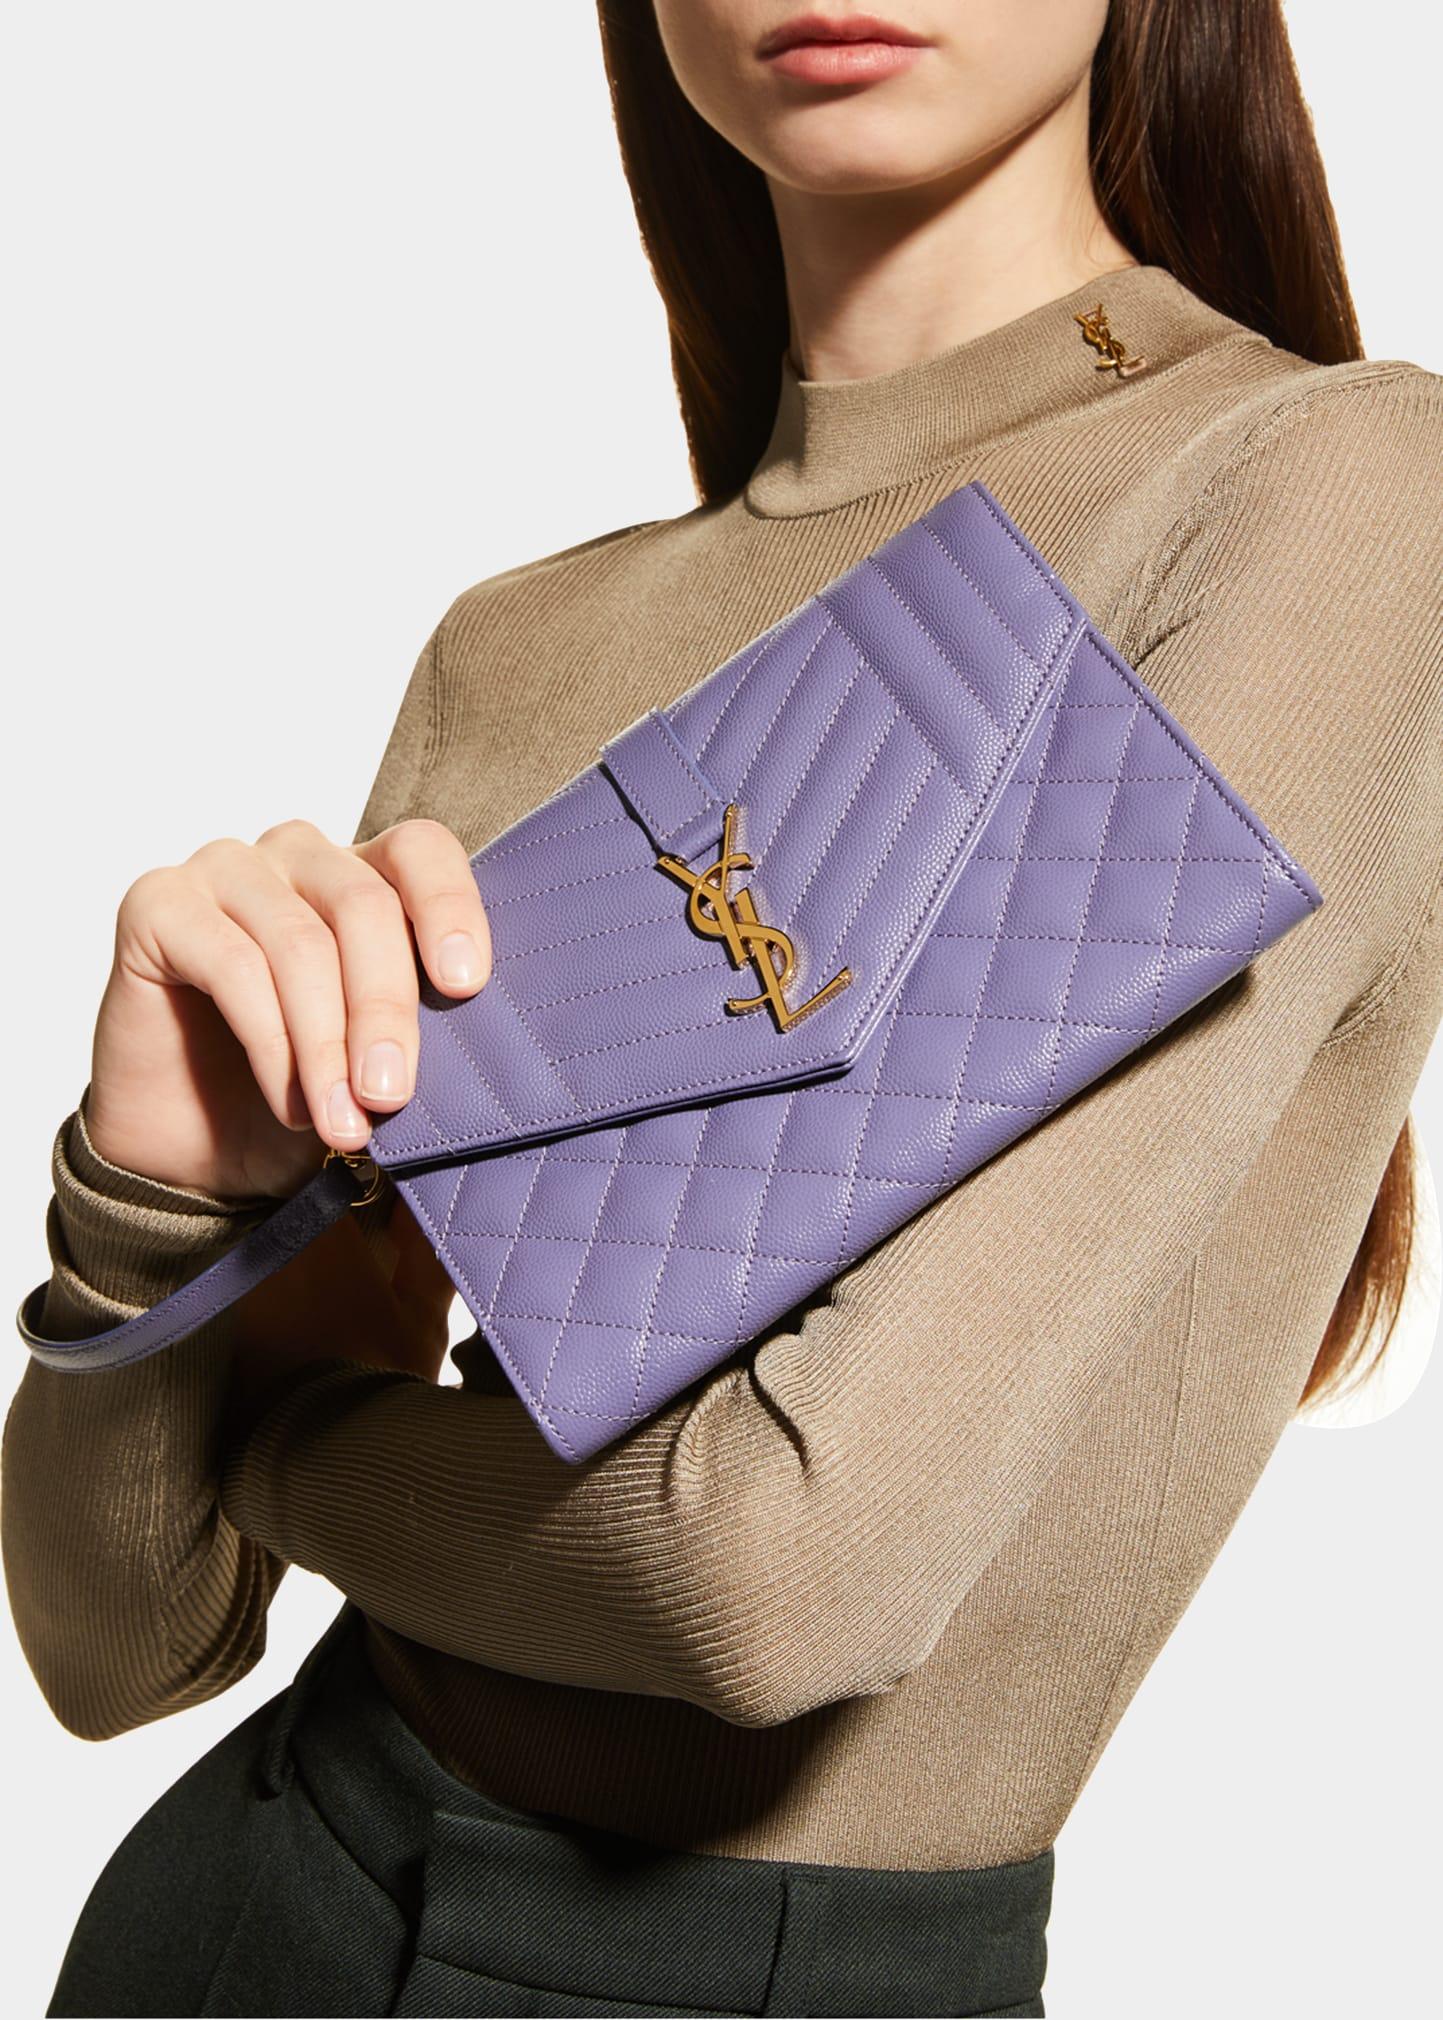 Saint Laurent Ysl Monogram Quilted Envelope Clutch Bag in Purple | Lyst